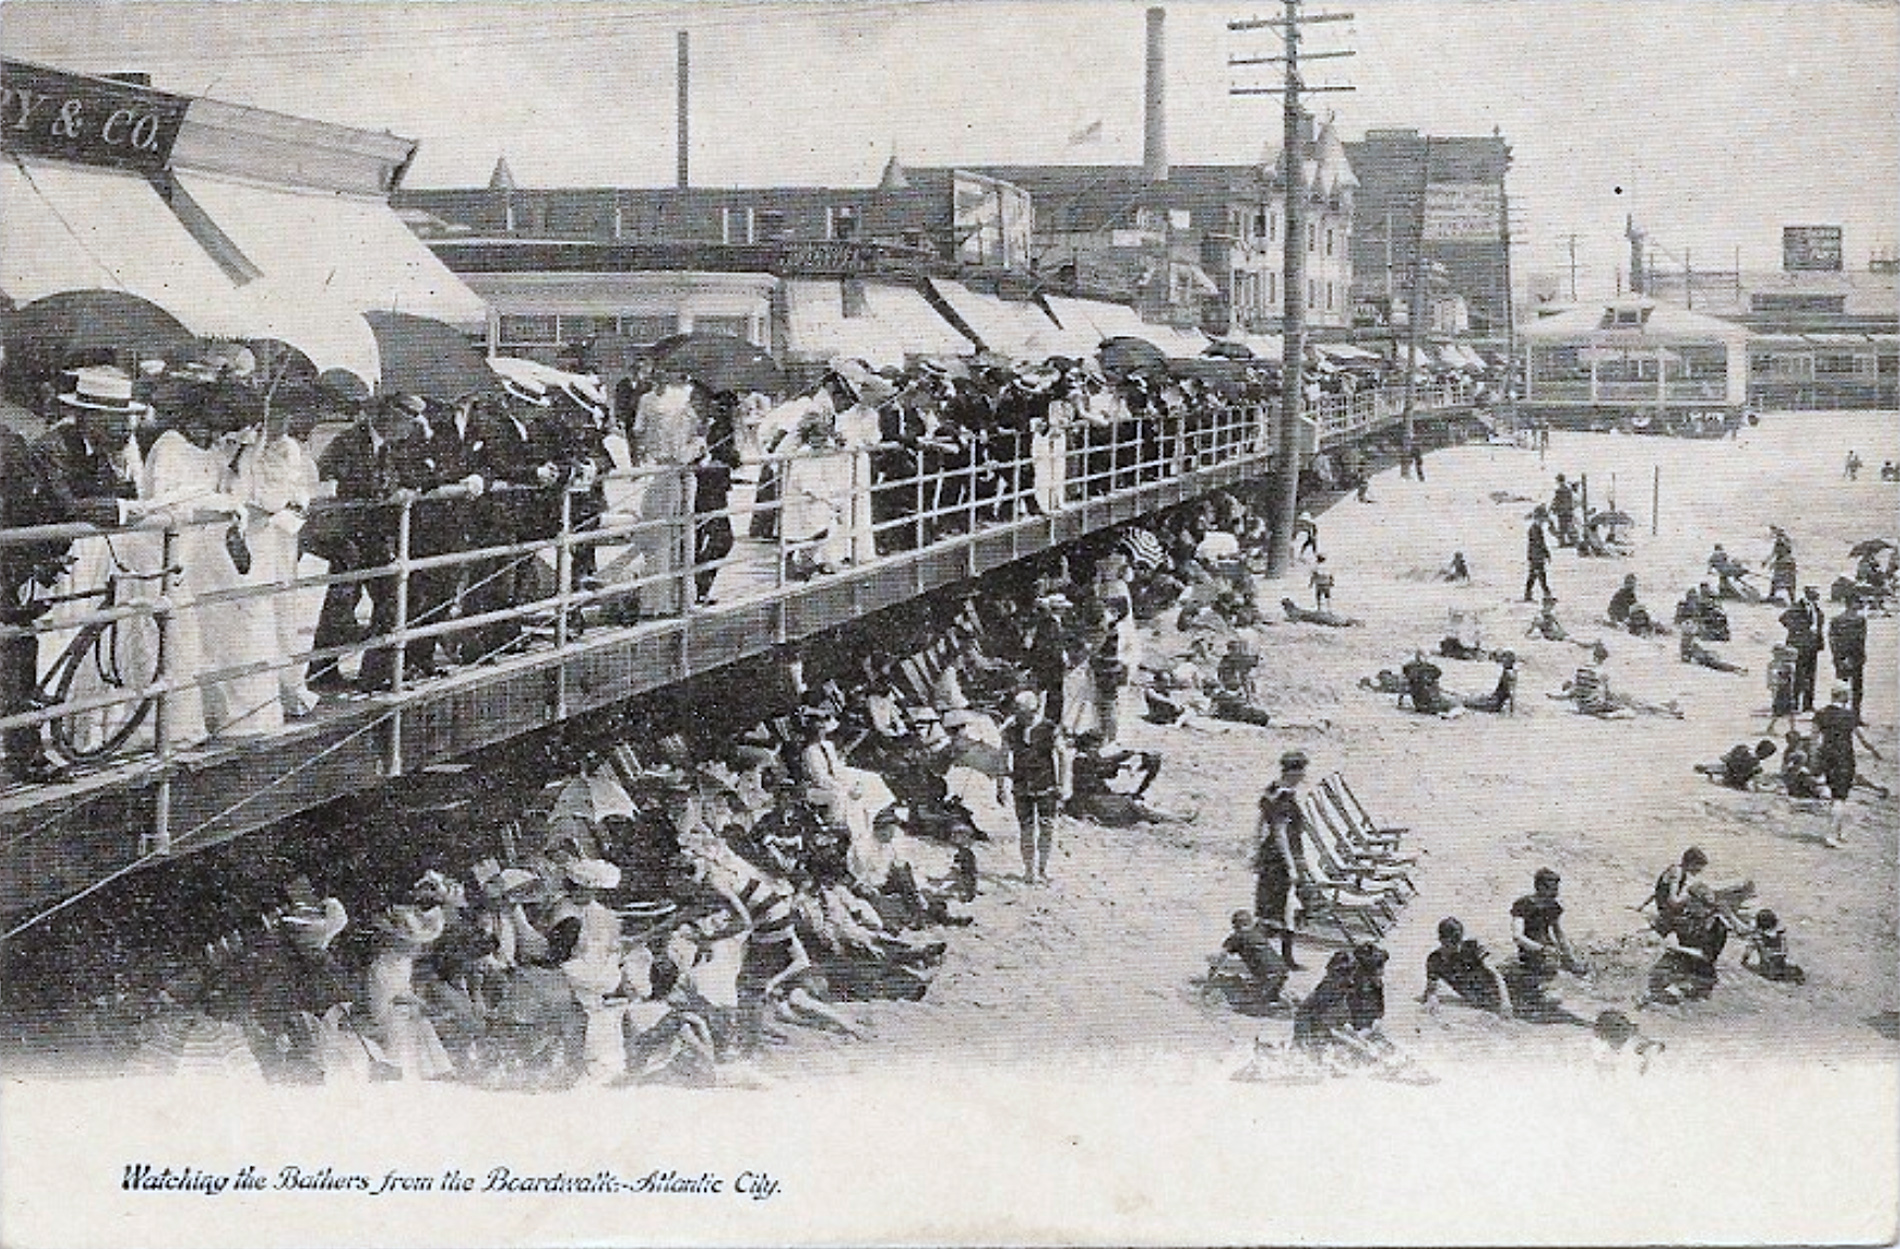 Atlantic City - Boardwalk and beach scene - 1910s-20s